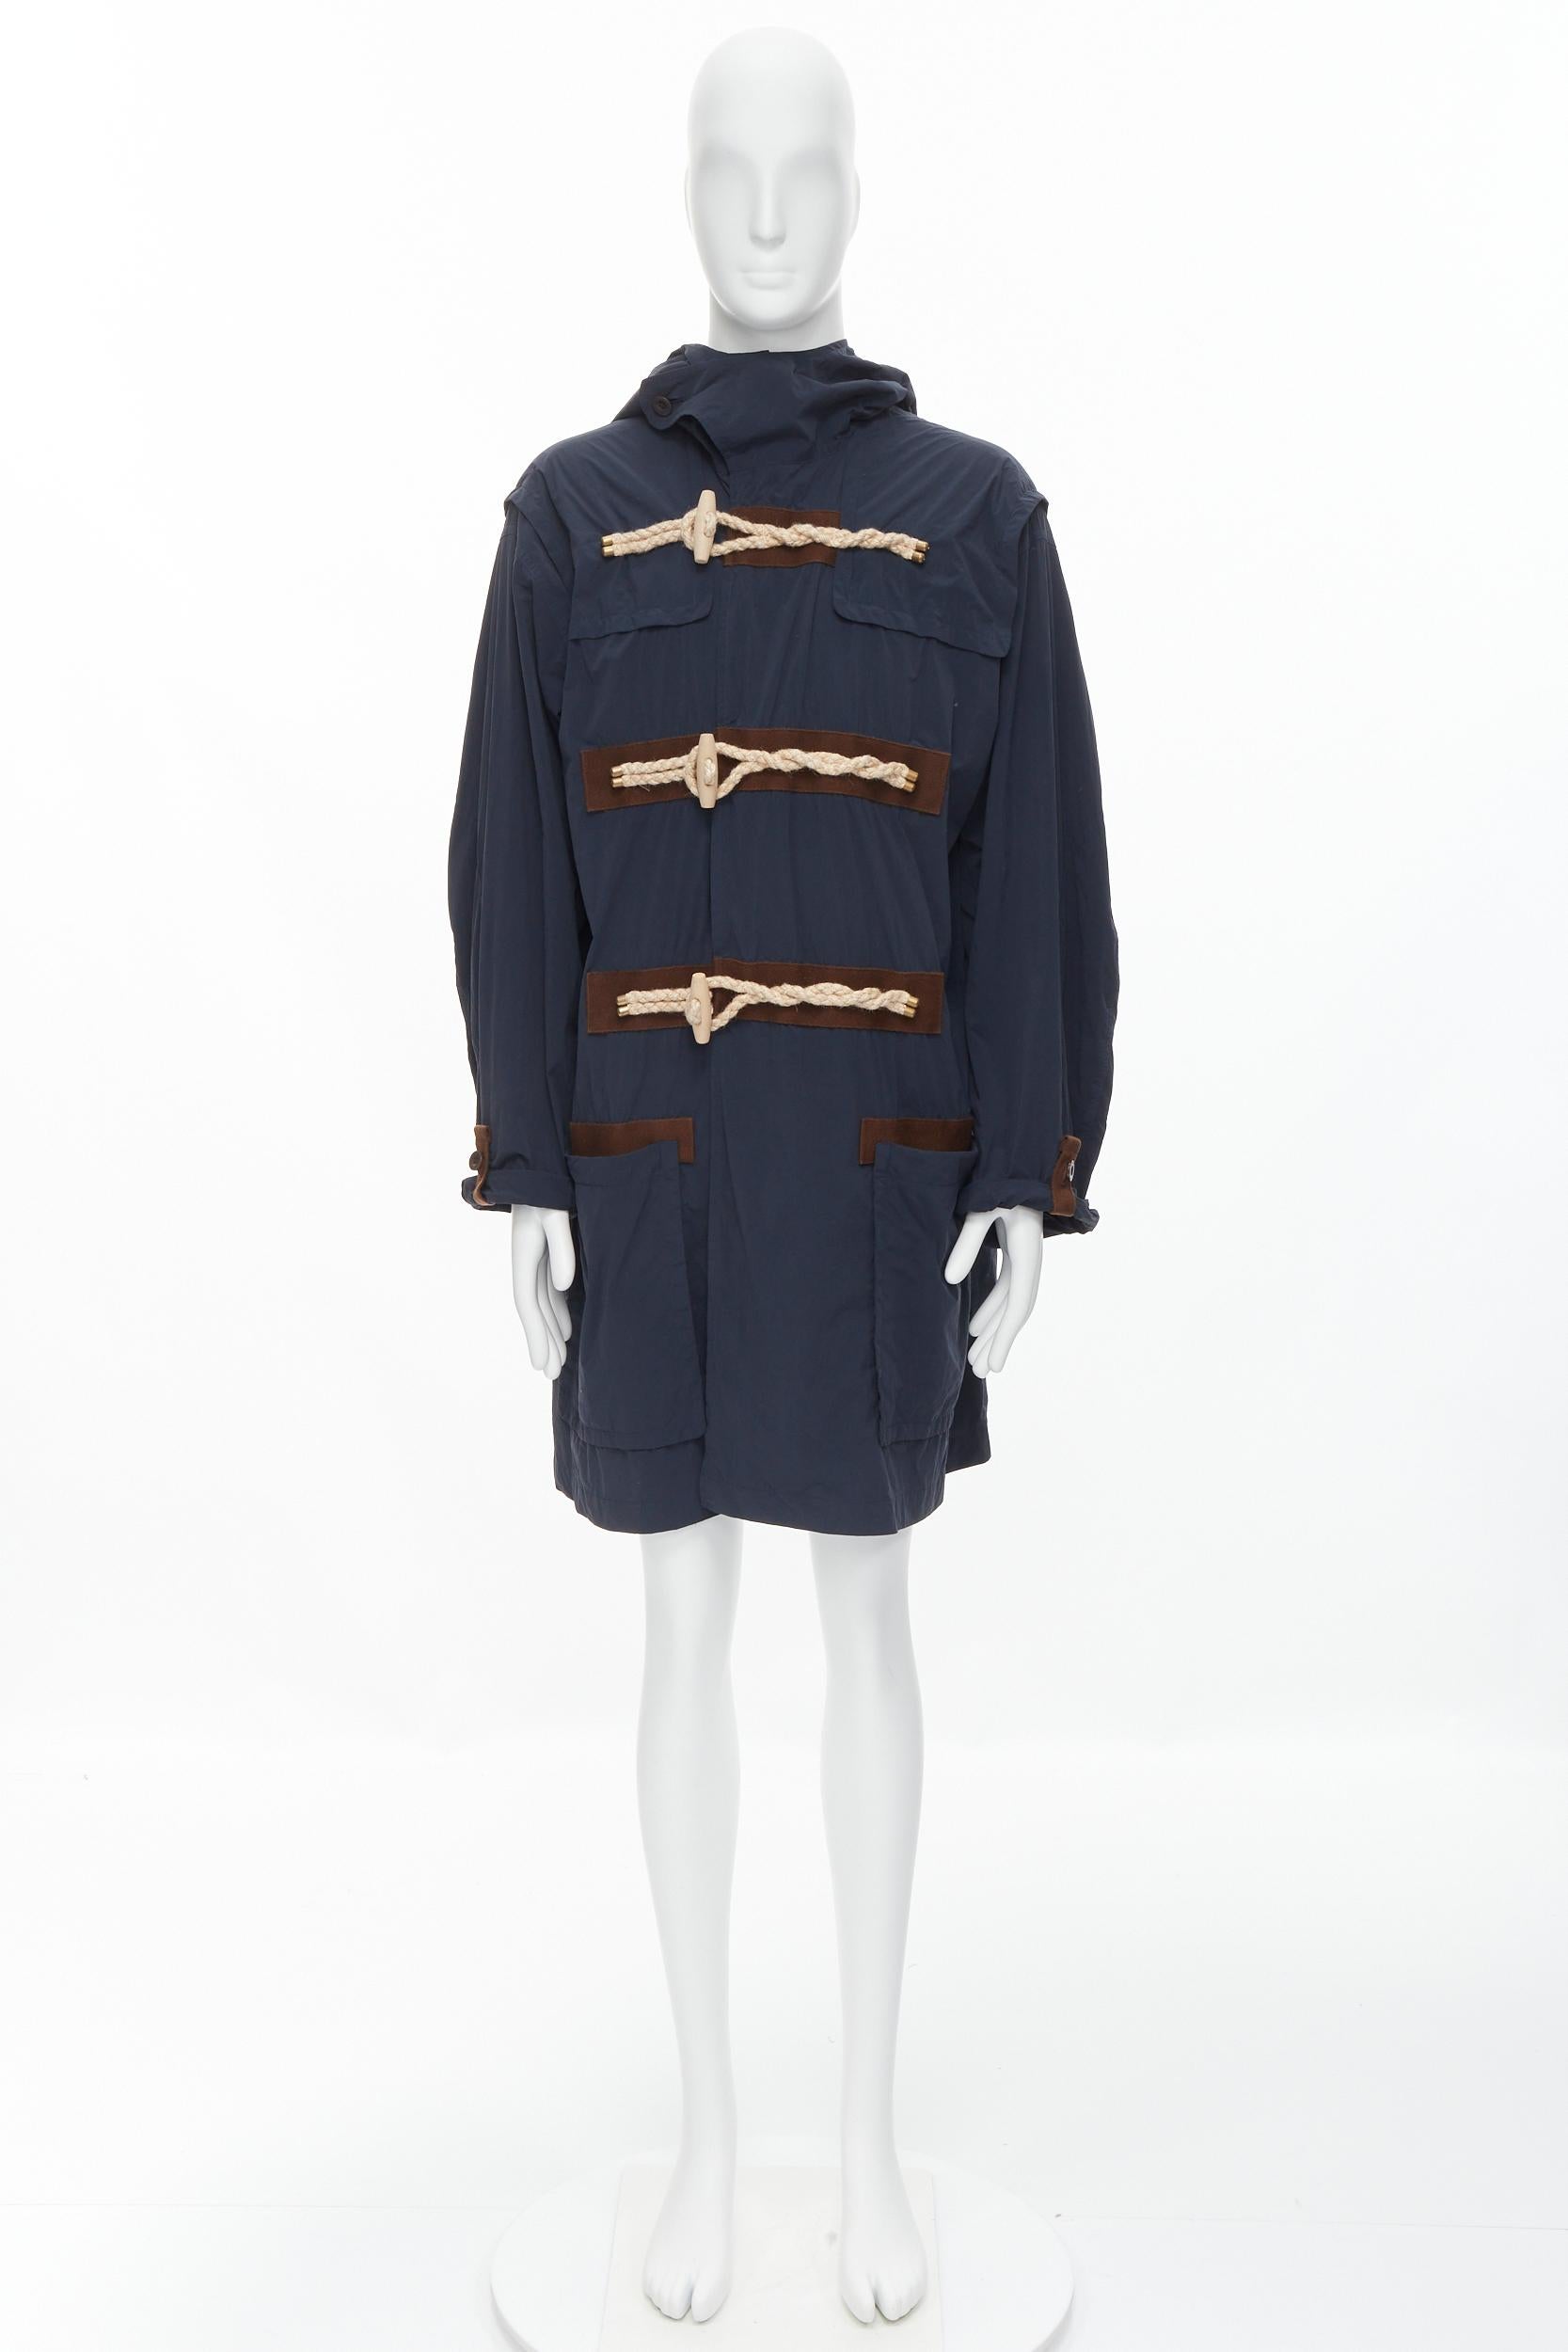 KOLOR navy blue rope wood toggle button anorak parka jacket JP2 M For Sale 4